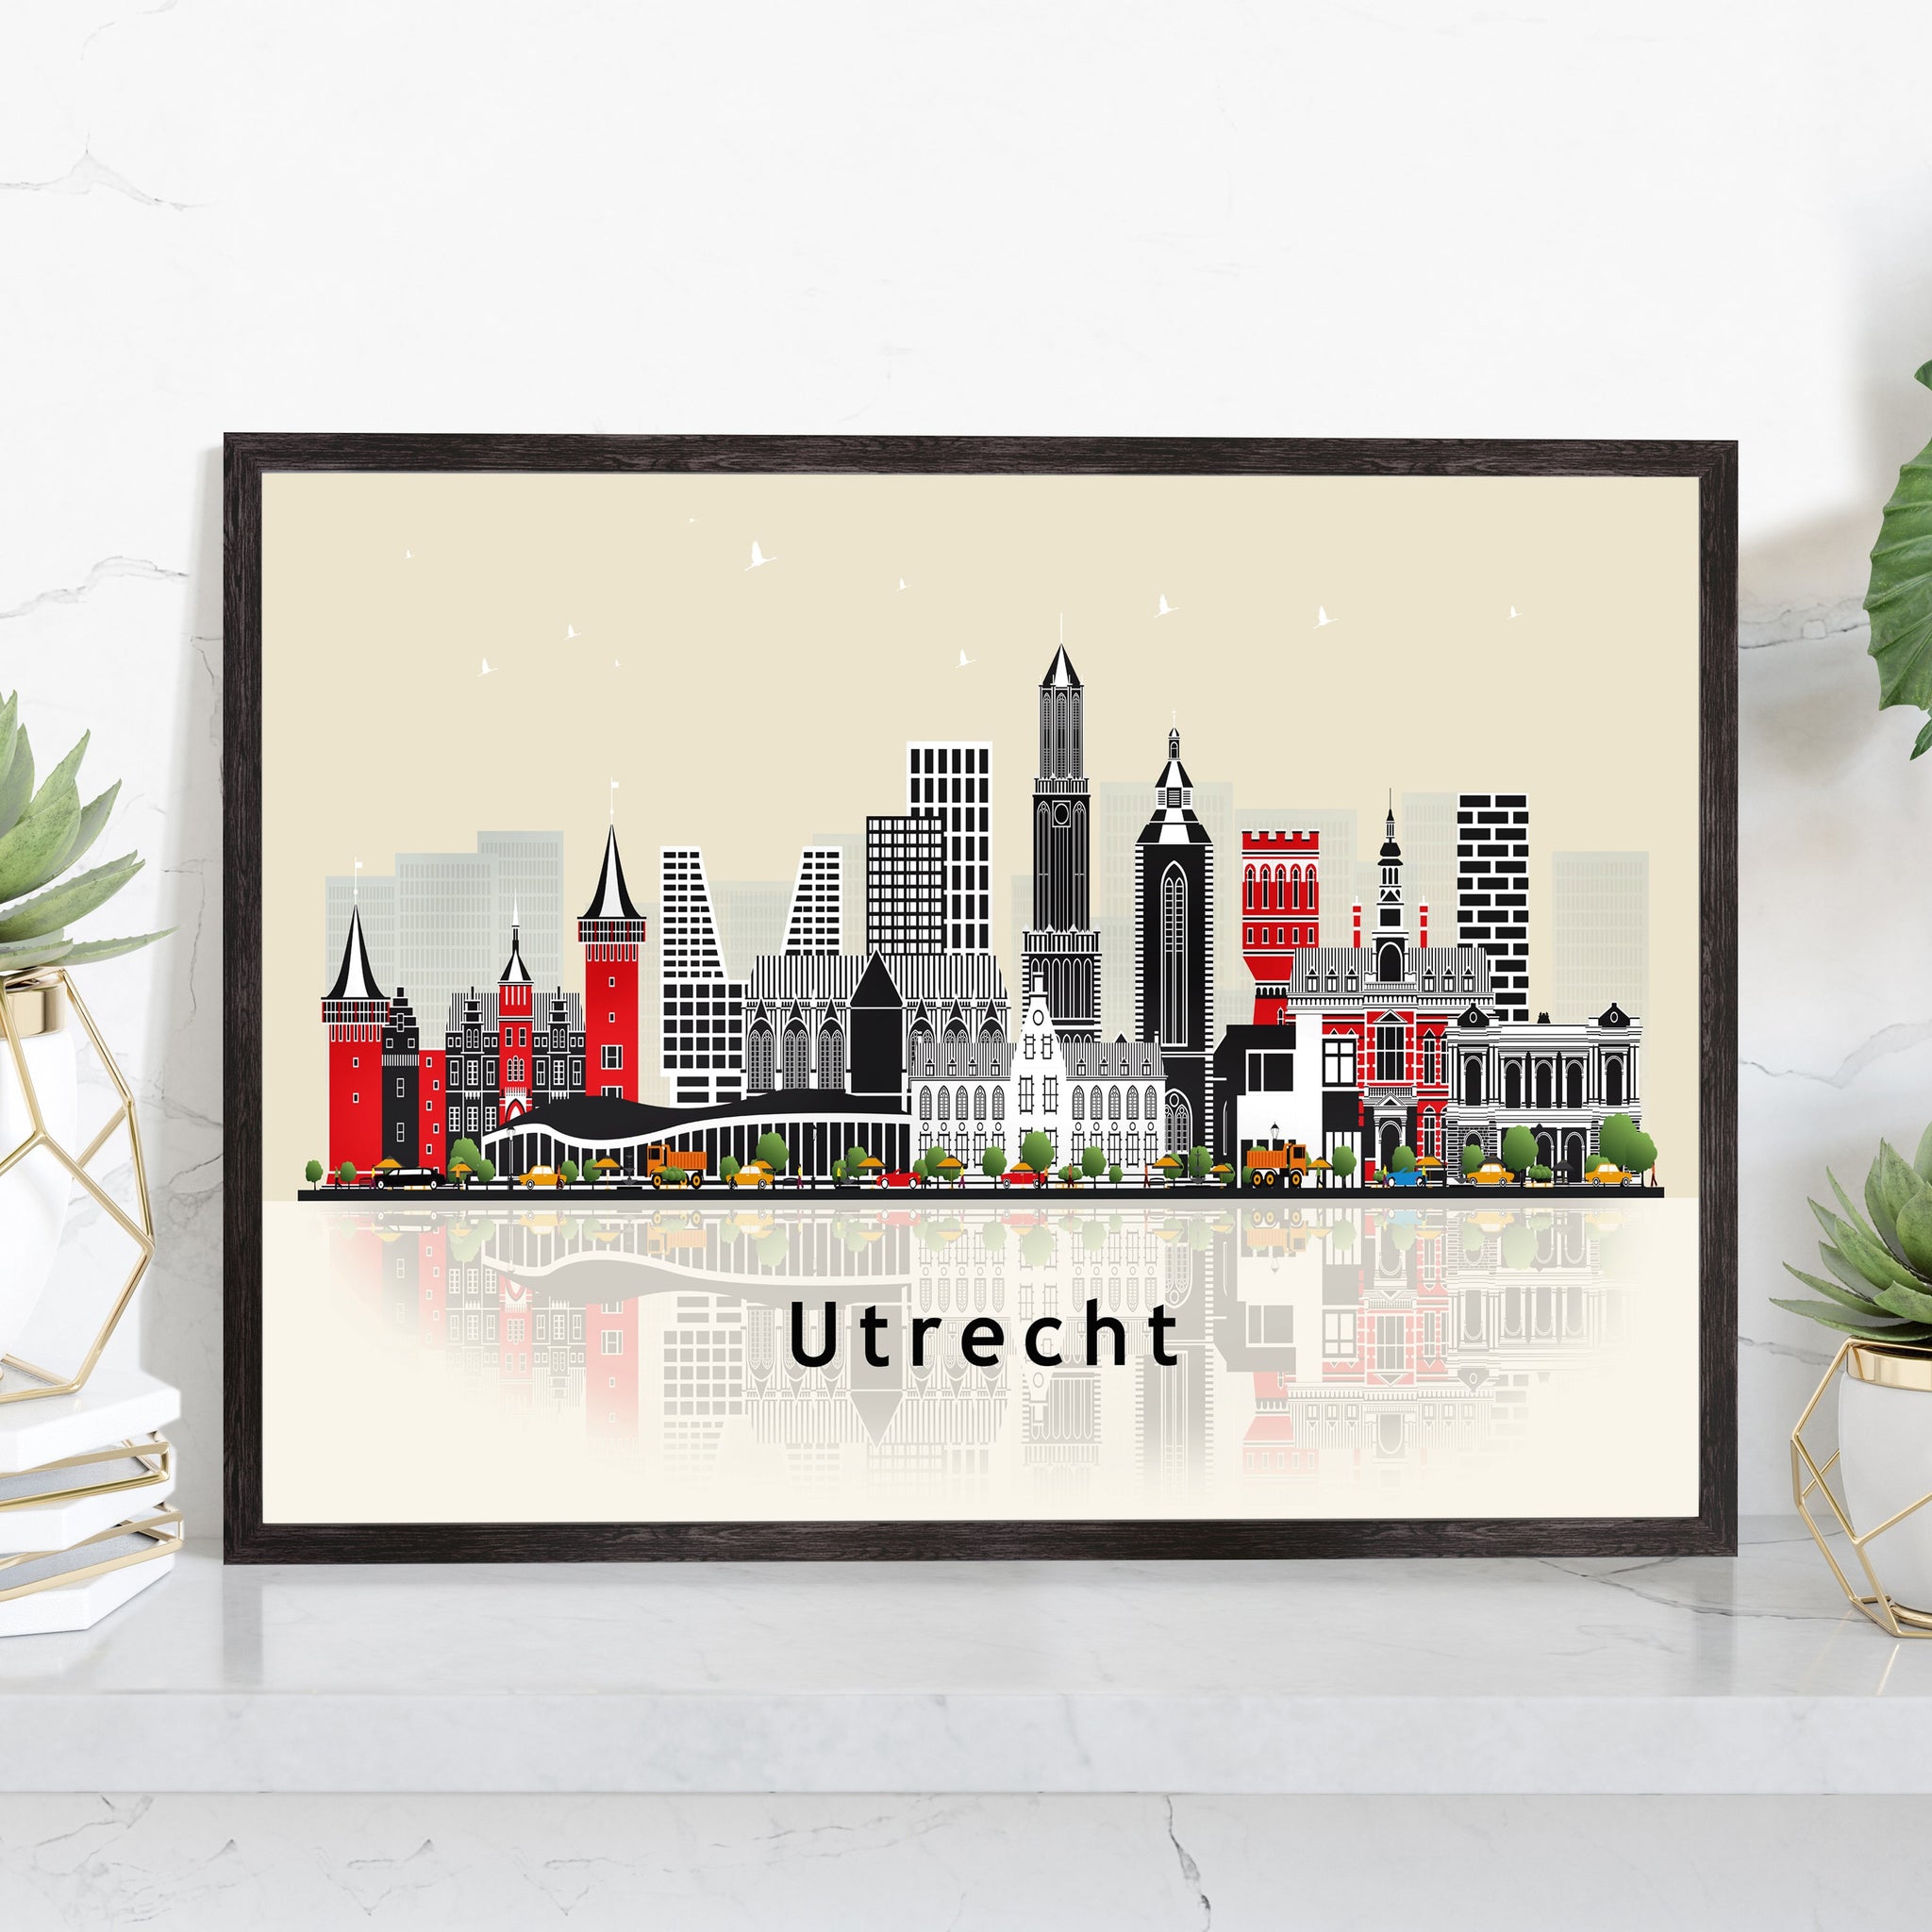 UTRECHT NETHERLANDS Illustration skyline poster, Modern skyline cityscape poster print, Utrecht landmark map poster, Home wall decoration